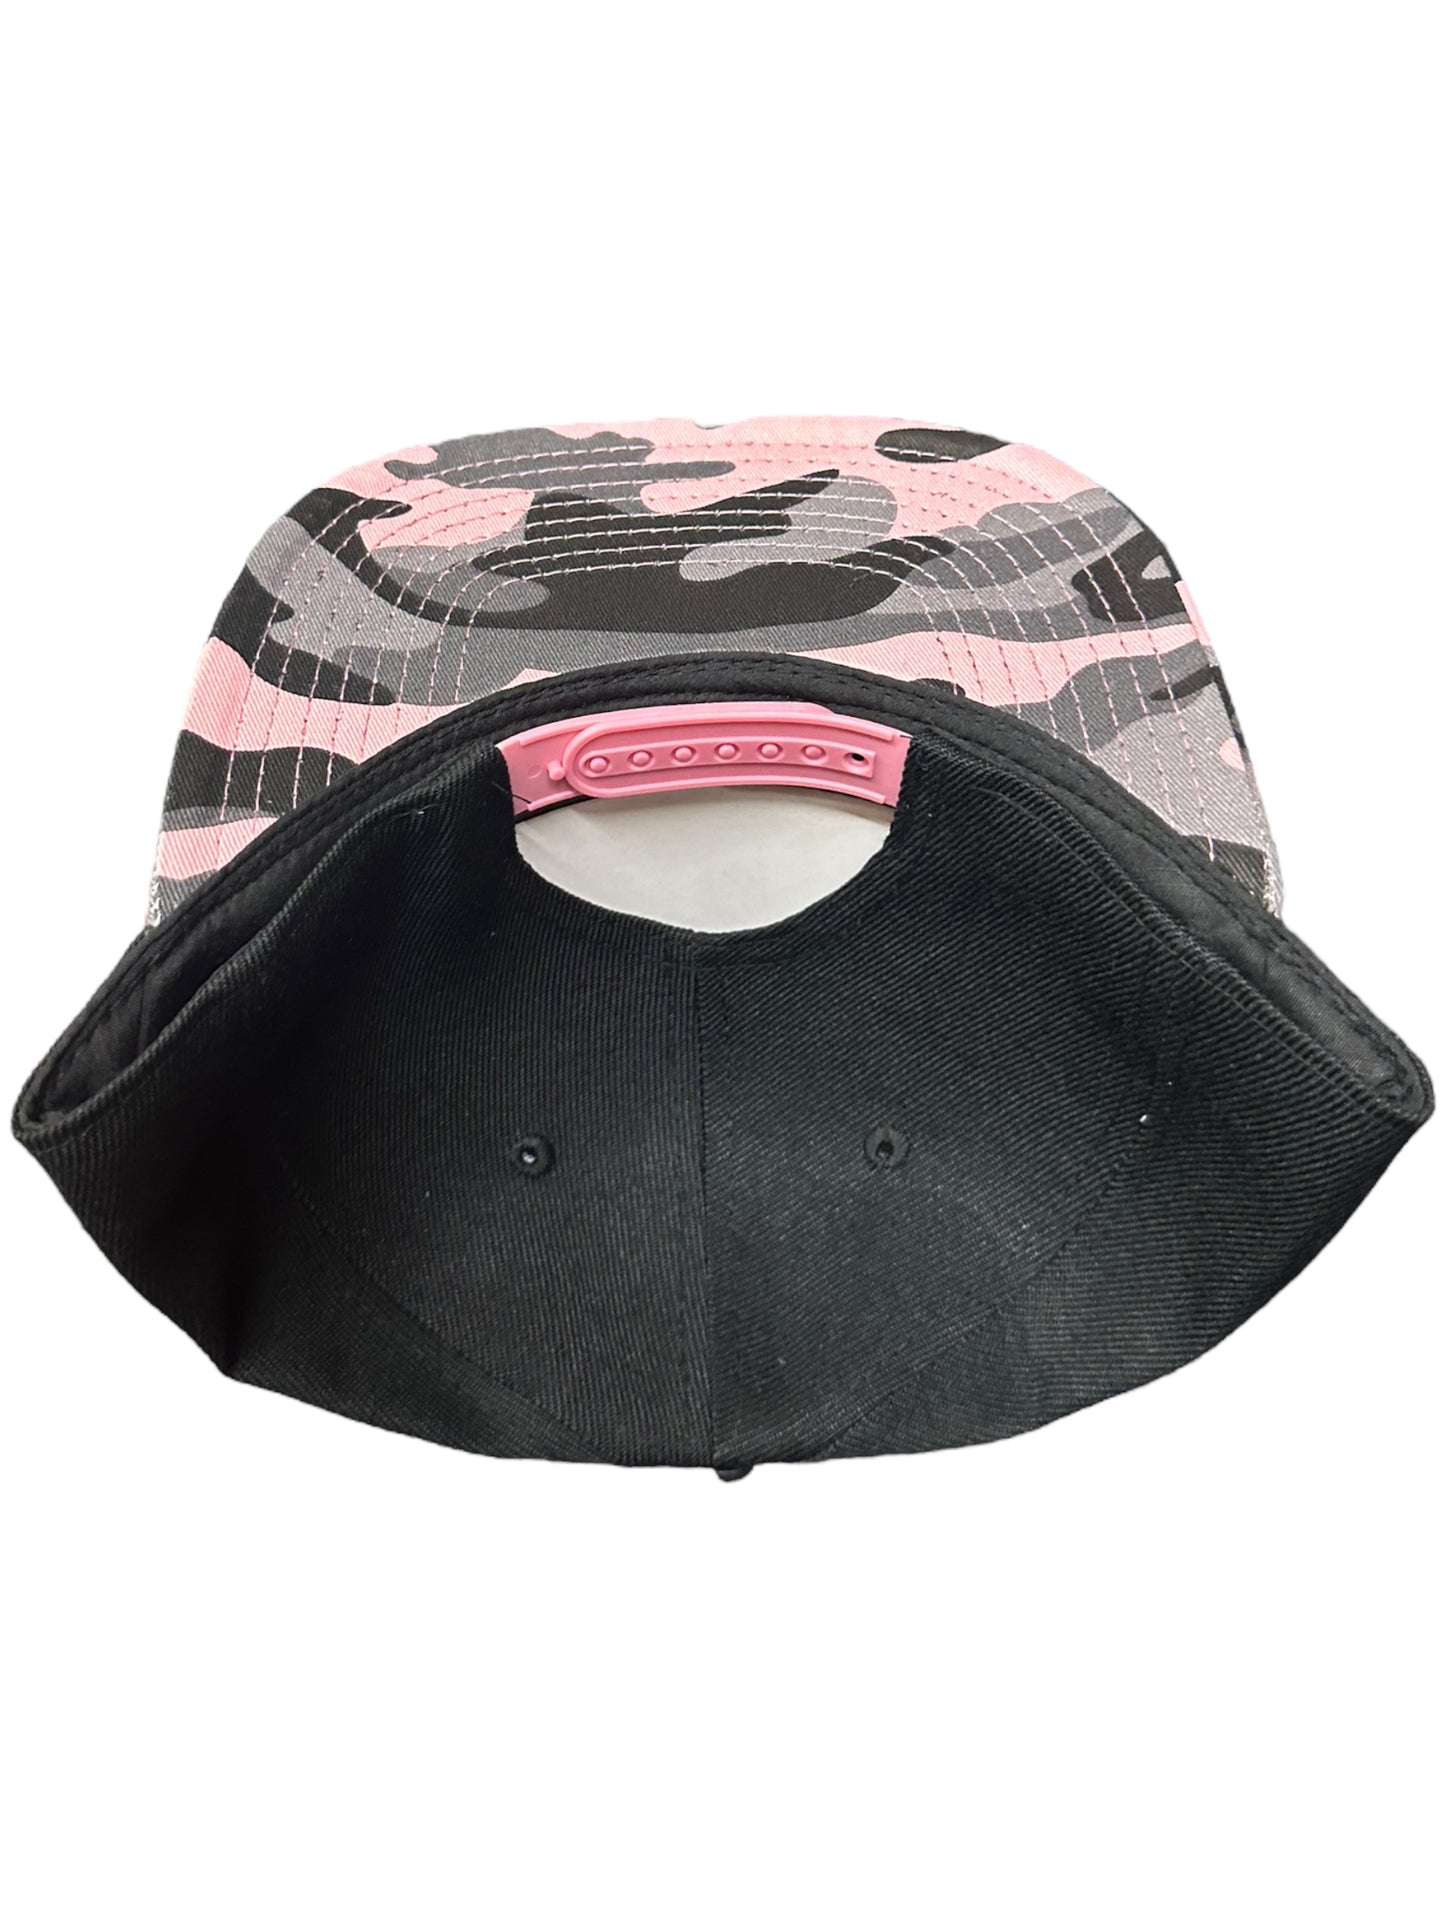 Light pink Camouflage black crown SnapBack